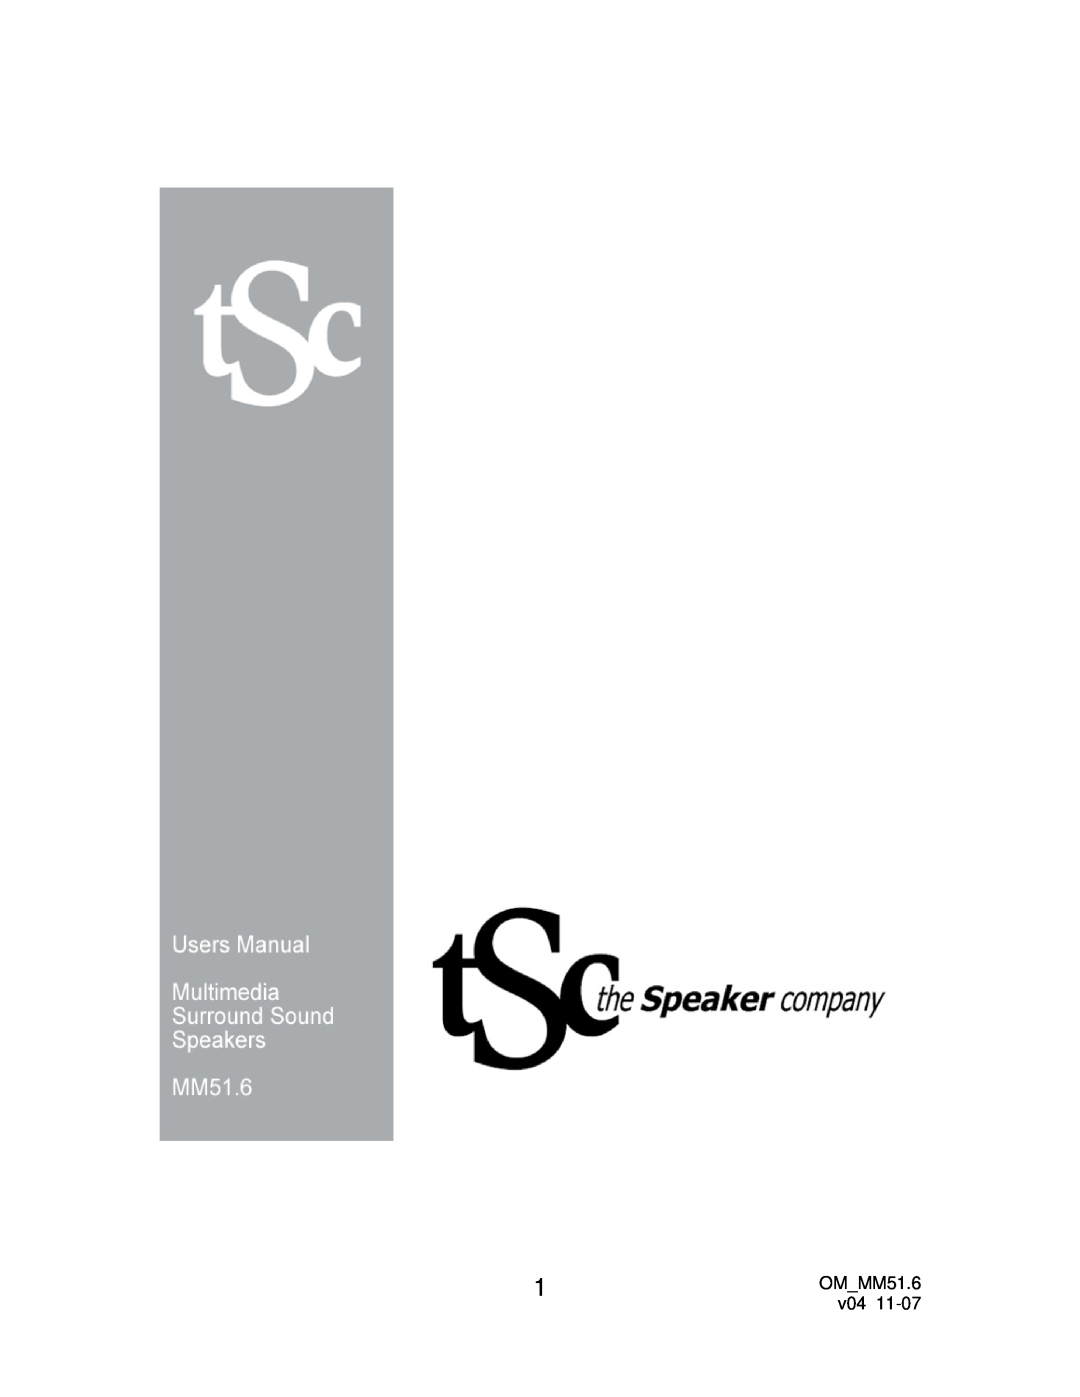 The Speaker Company manual OM MM51.6 